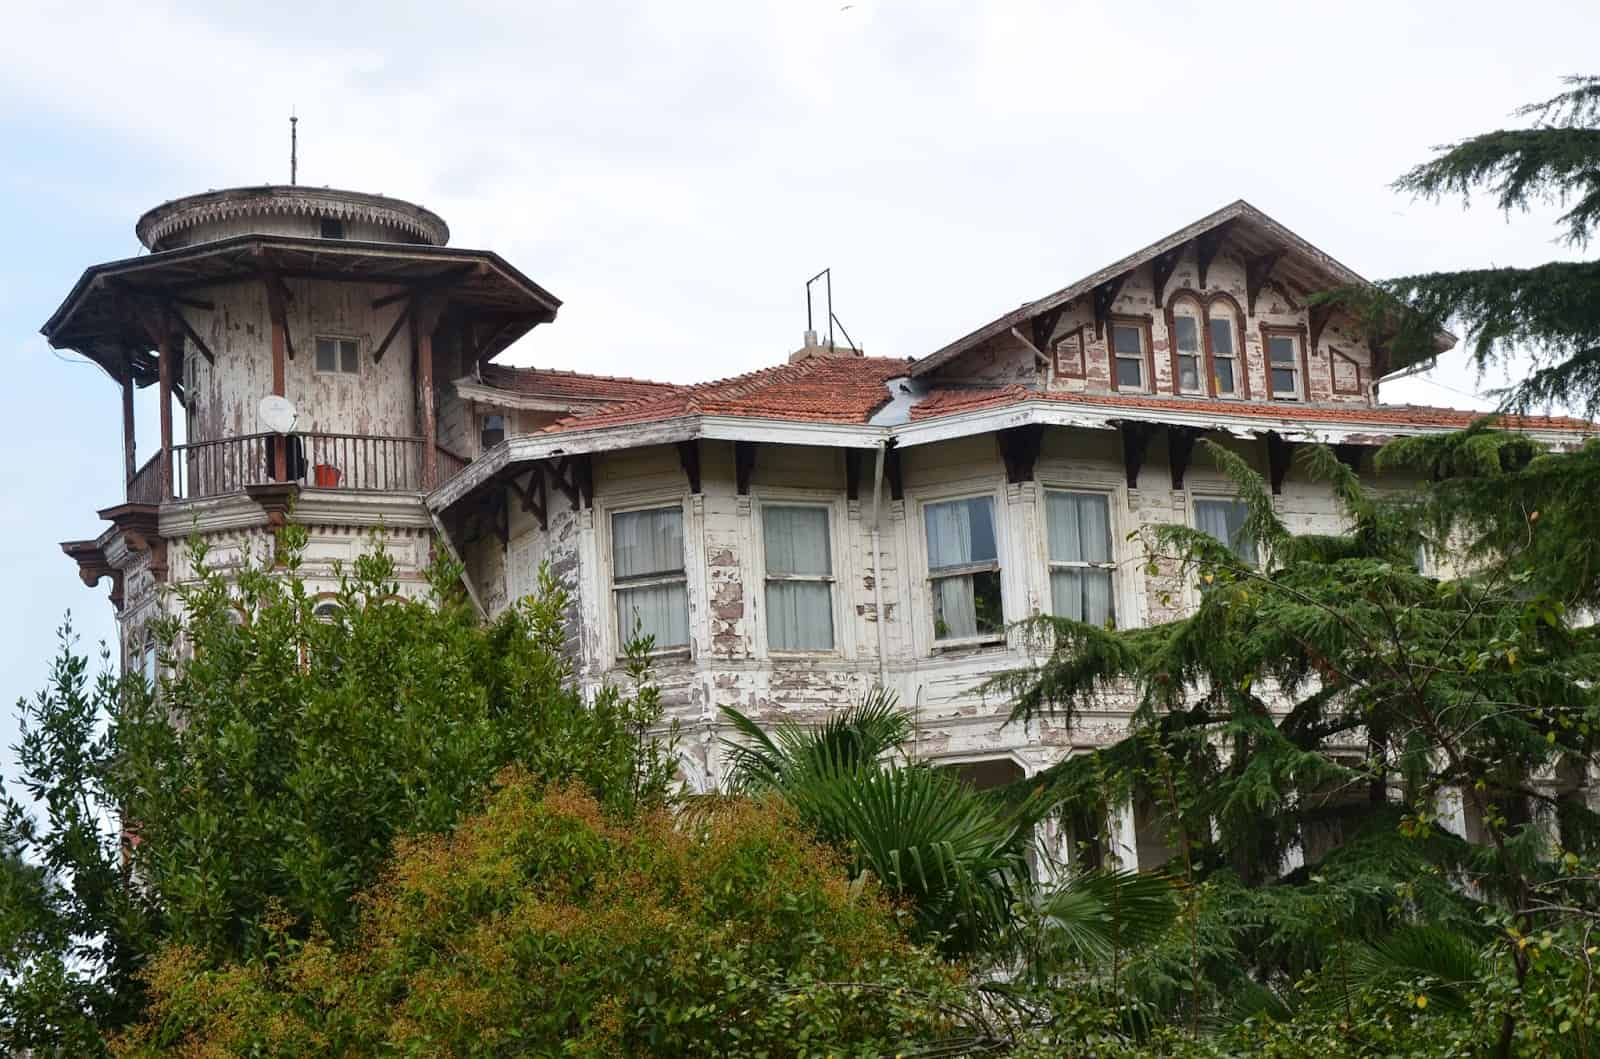 Ottoman home on Büyükada, Istanbul, Turkey